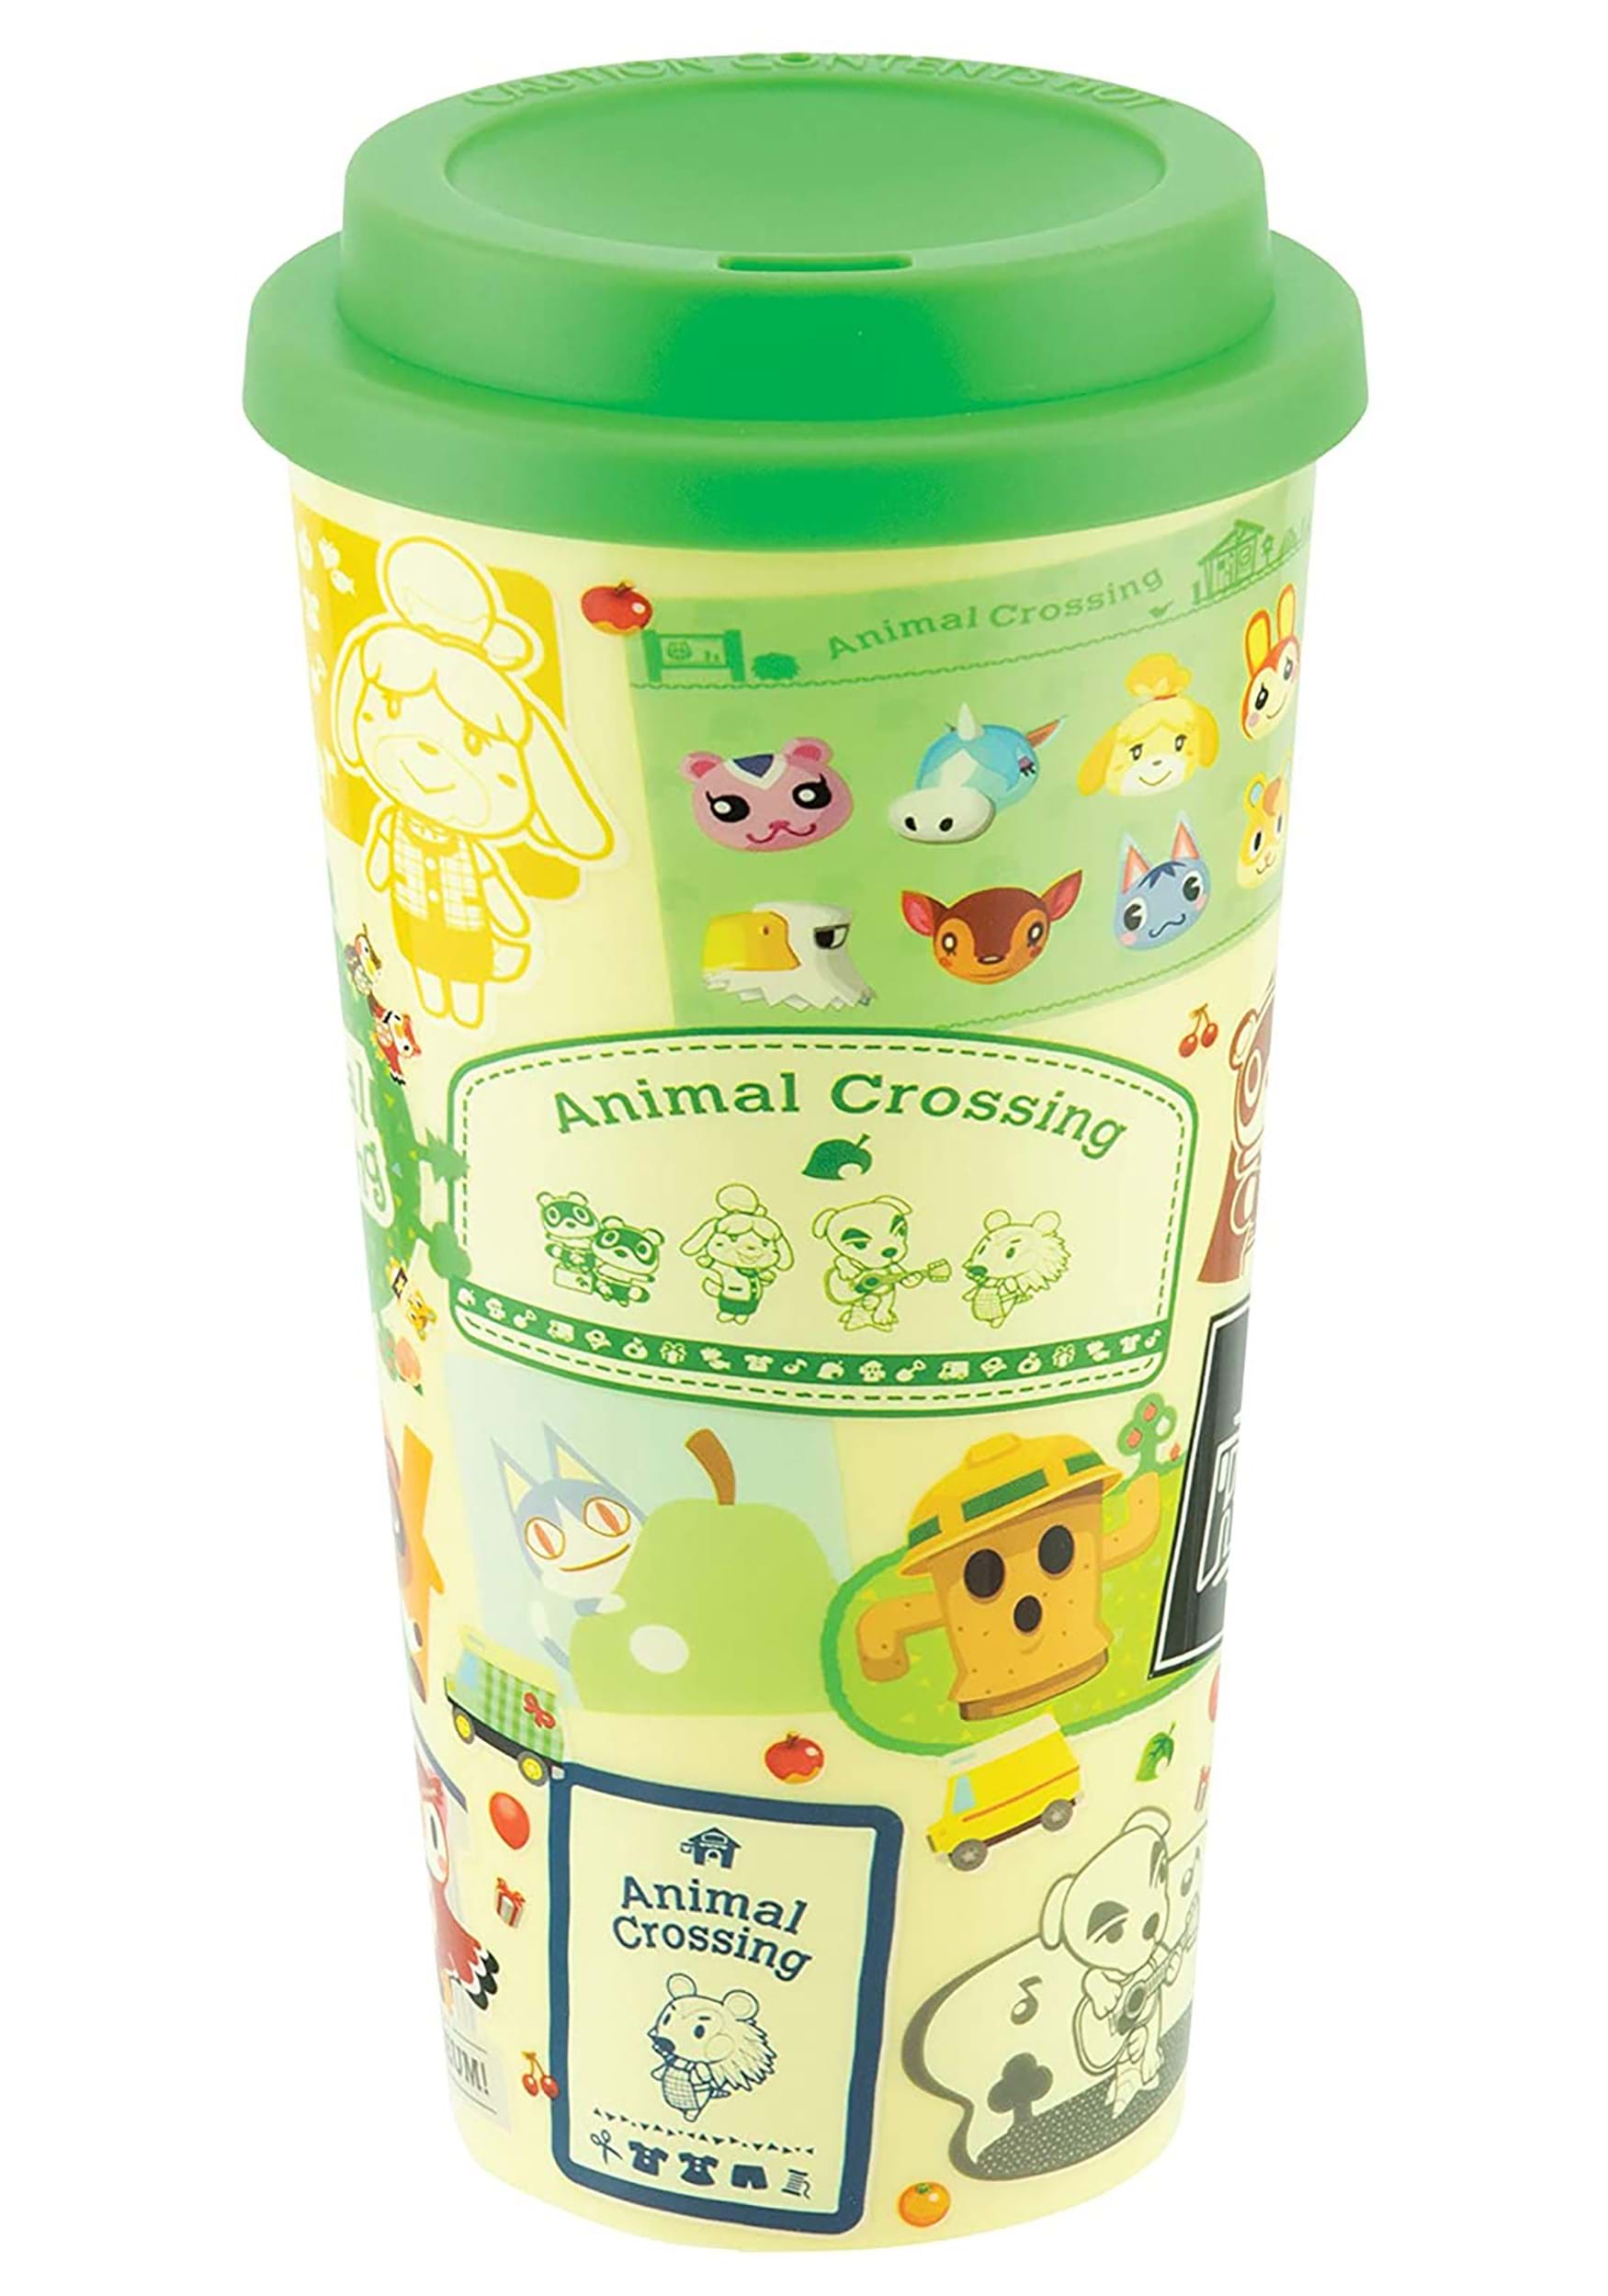 Photos - Other Toys Paladone Nintendo: Animal Crossing Travel Mug Green/Brown/Yellow P 